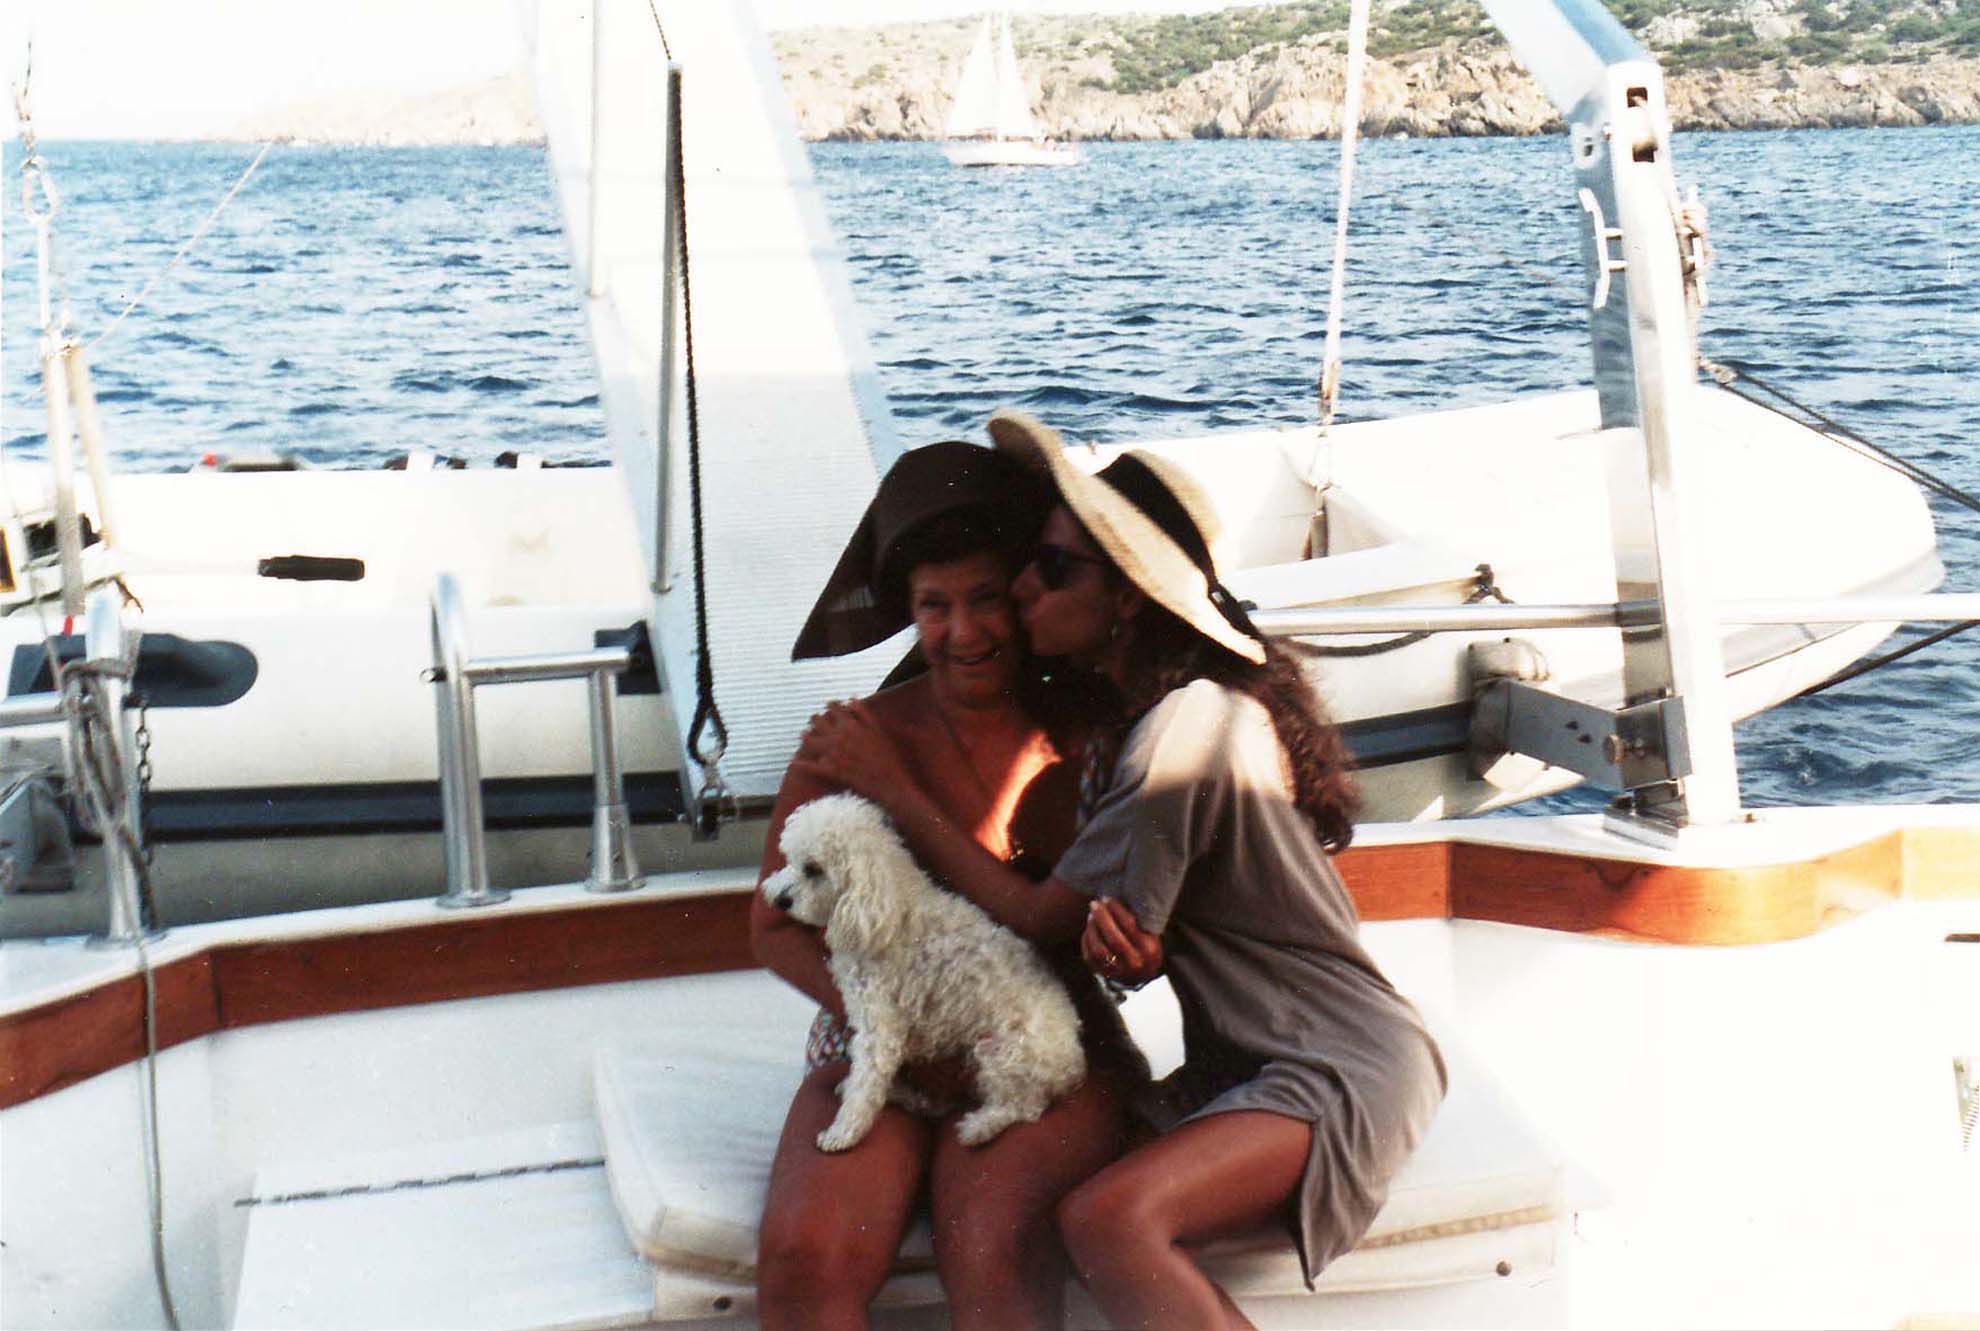 Lucia Aliberti with her friend Vera Giulini⚘Porto Cervo⚘Tour and Lunch on the Boat⚘:http://www.luciaaliberti.it #luciaaliberti #veragiulini #portocervo #boat #holiday